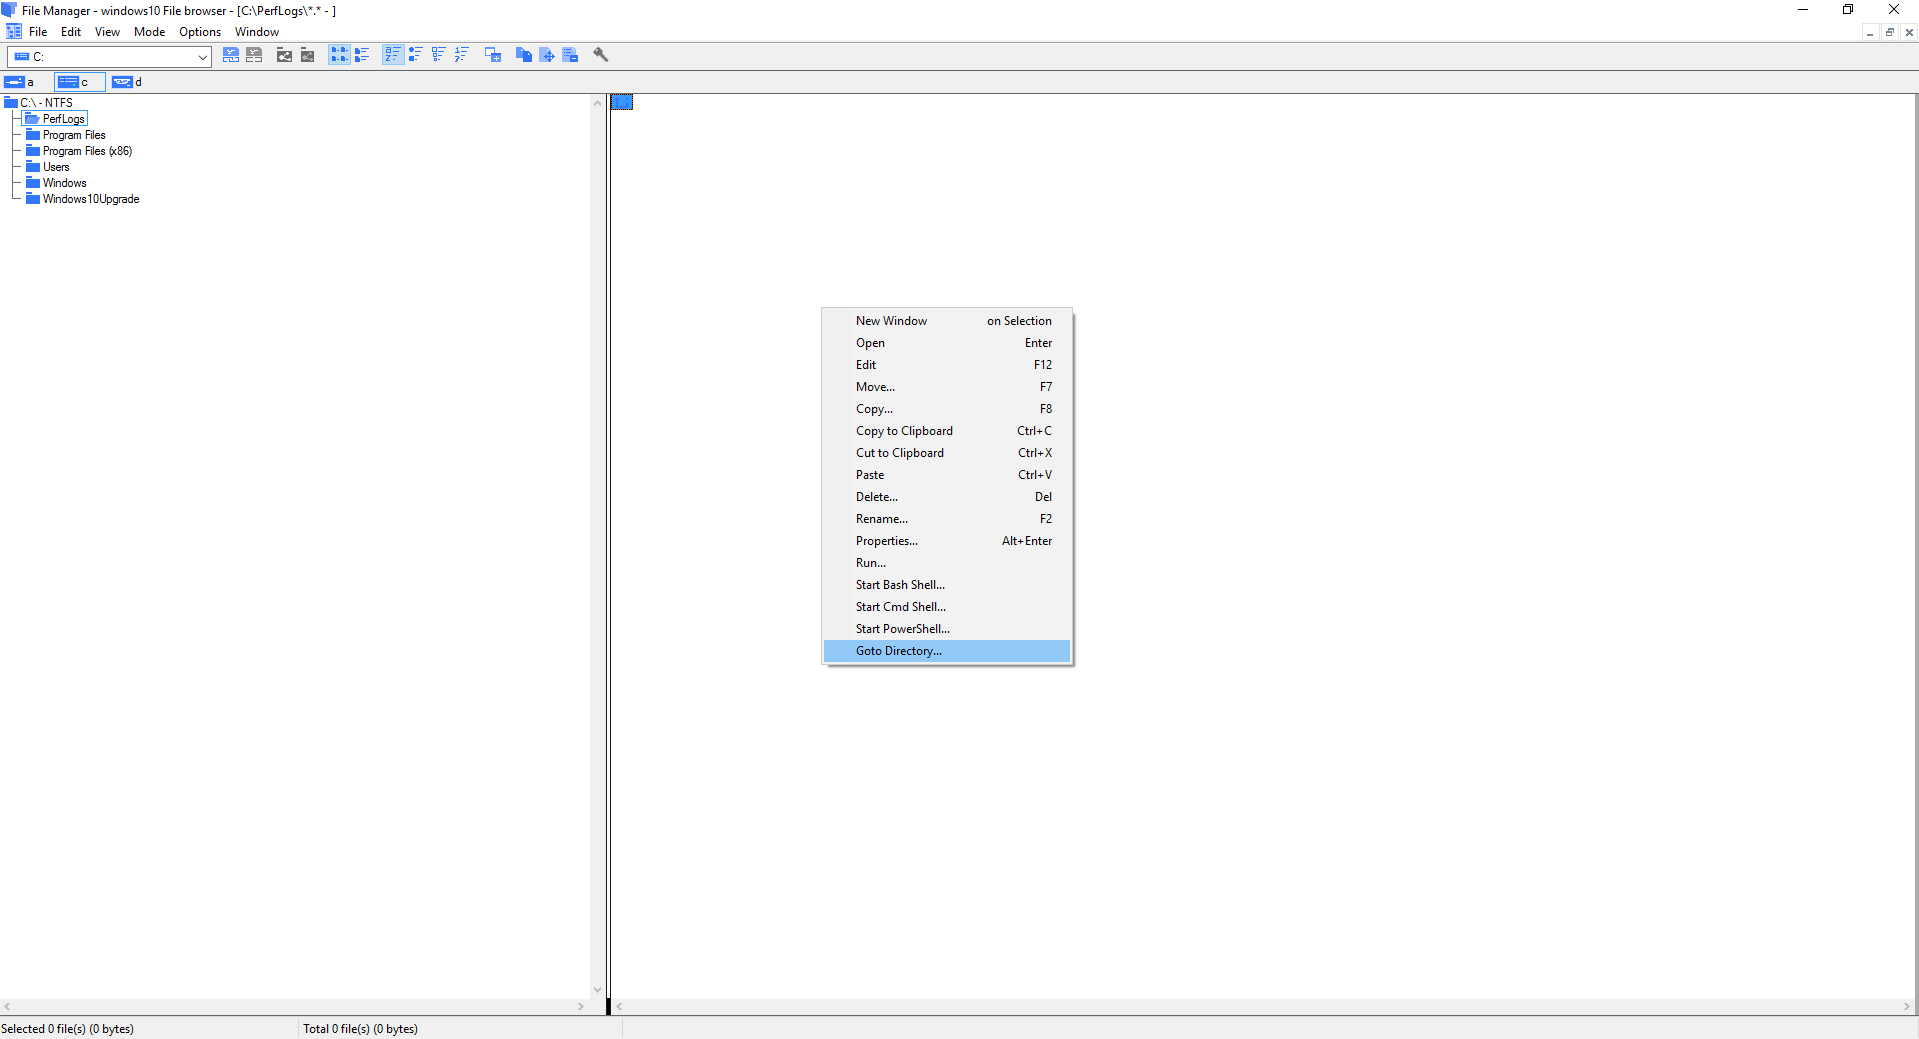 File Manager - File Explorer for Windows 10